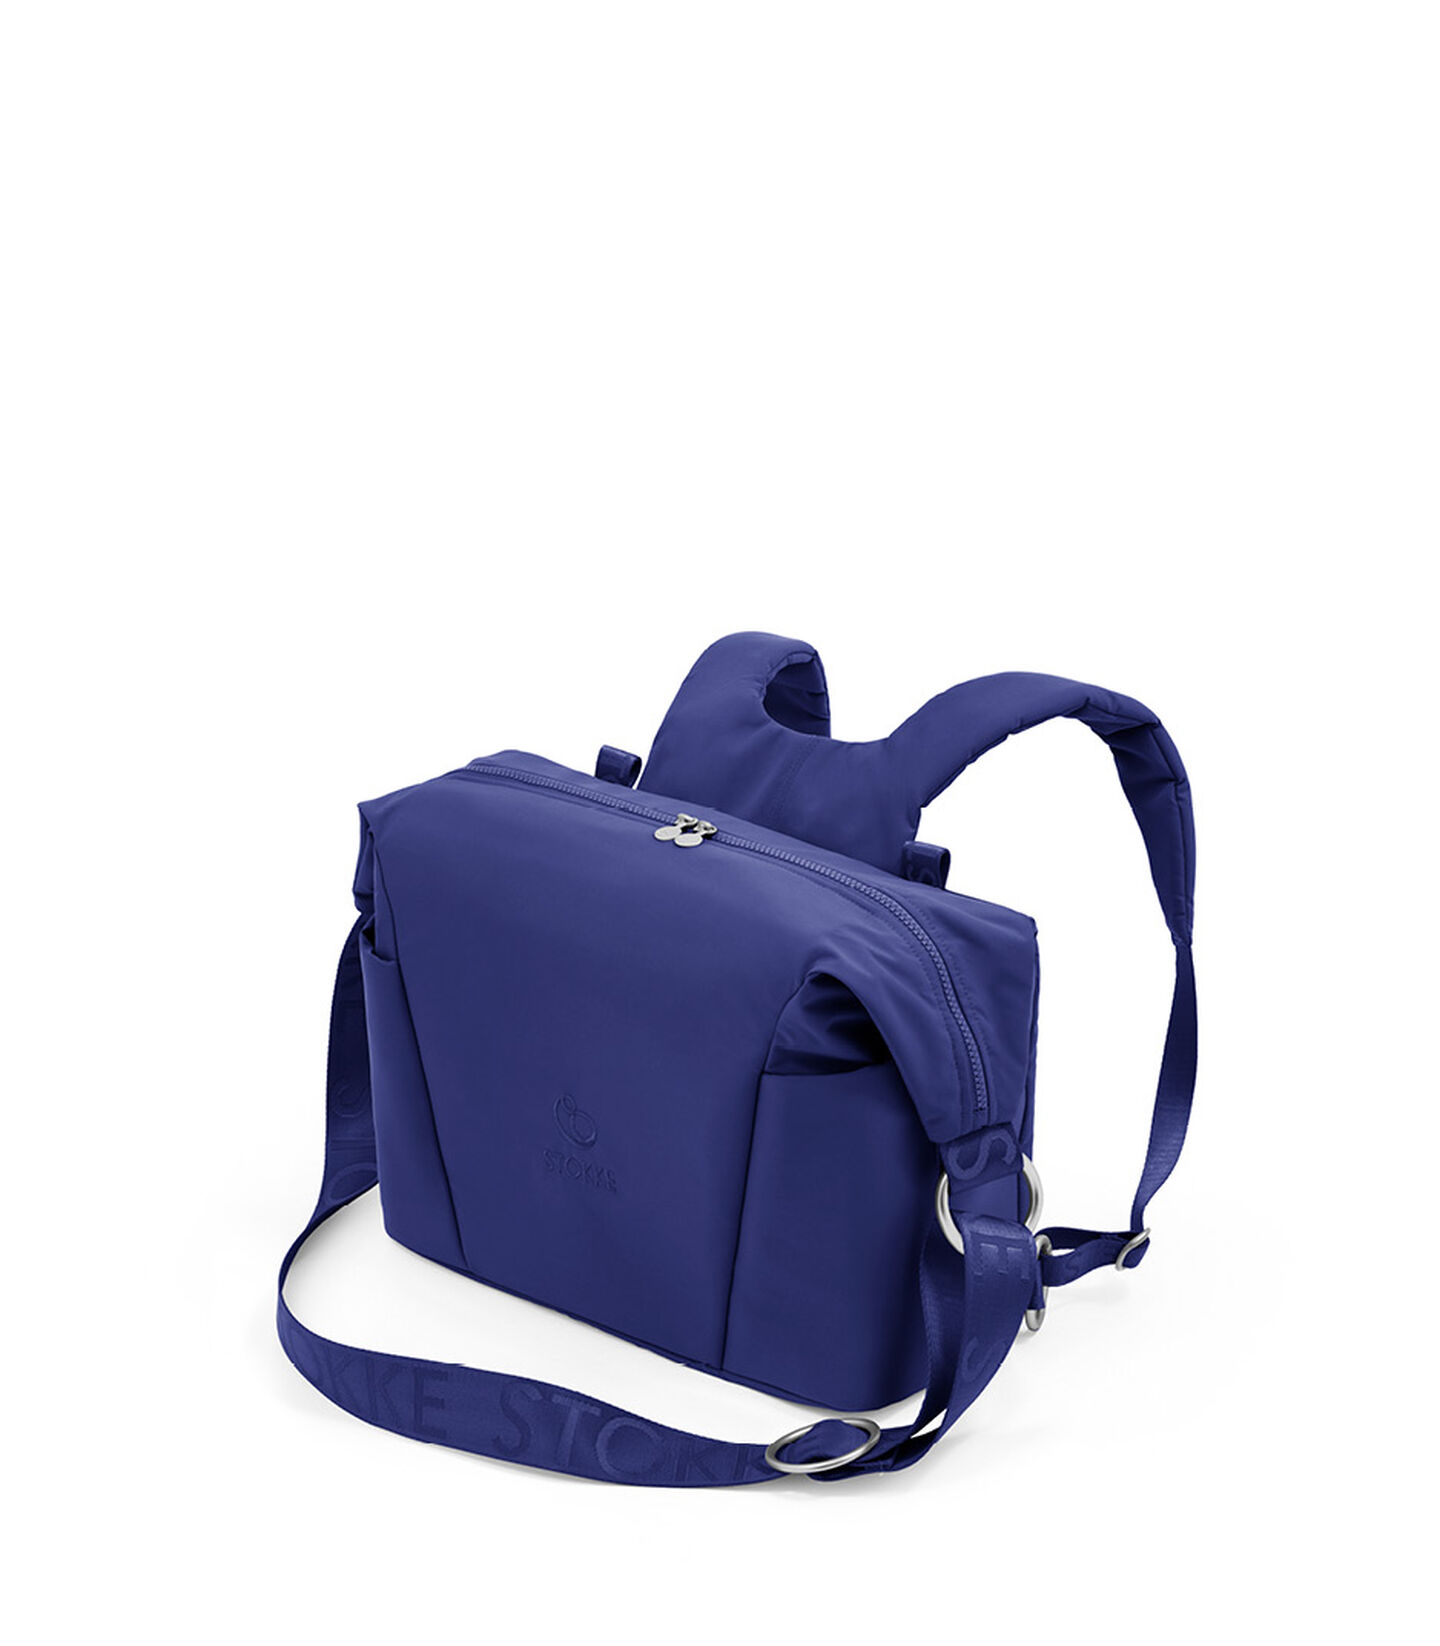 Stokke® Xplory® X Changing bag Royal Blue, Royal Blue, mainview view 1